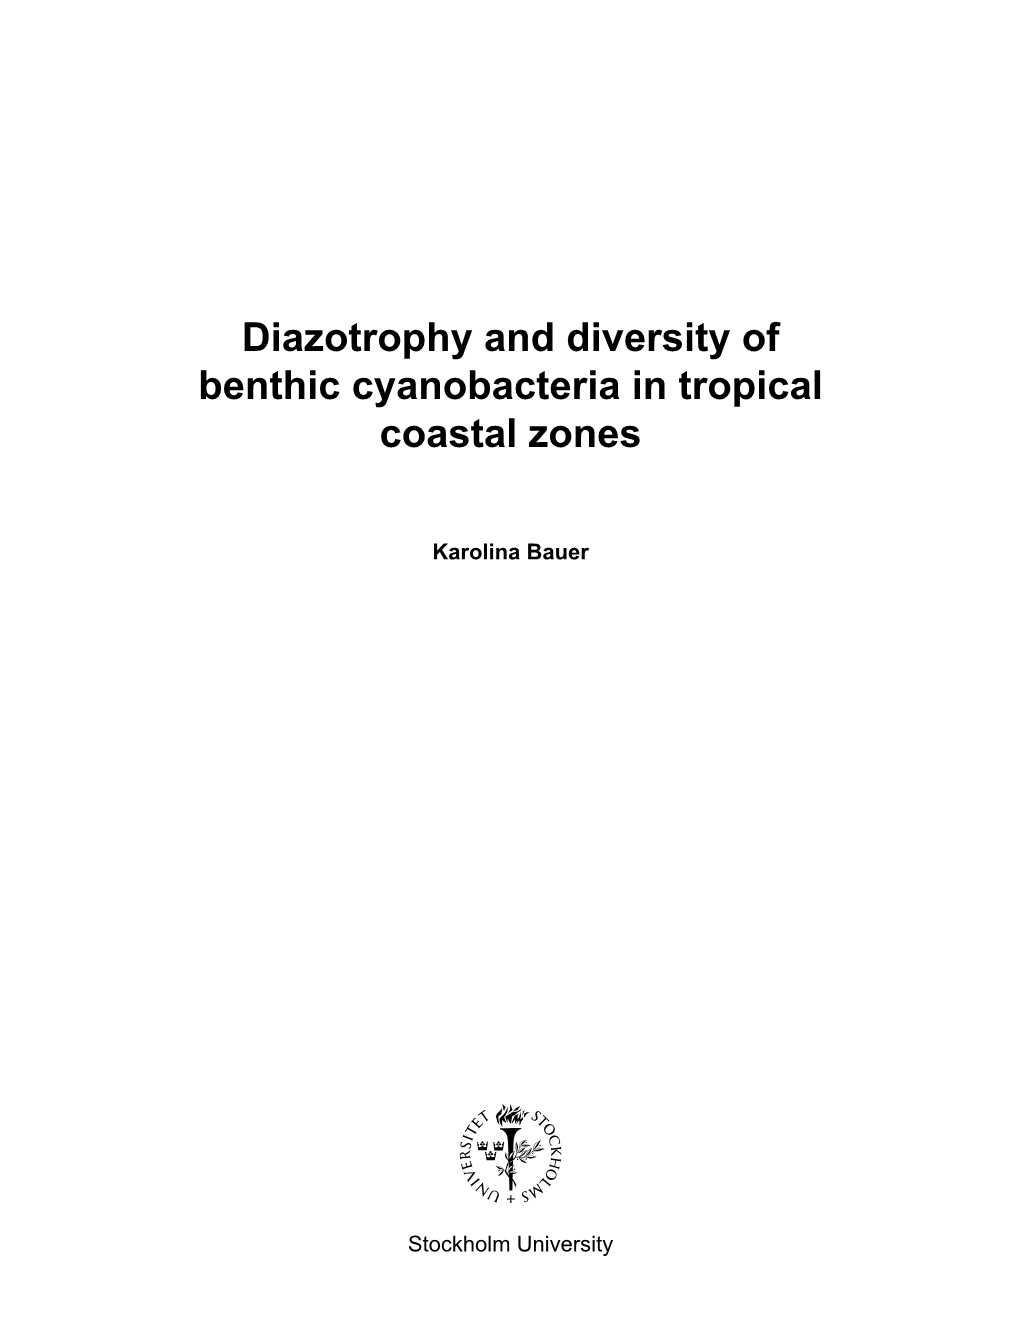 Diazotrophy and Diversity of Benthic Cyanobacteria in Tropical Coastal Zones